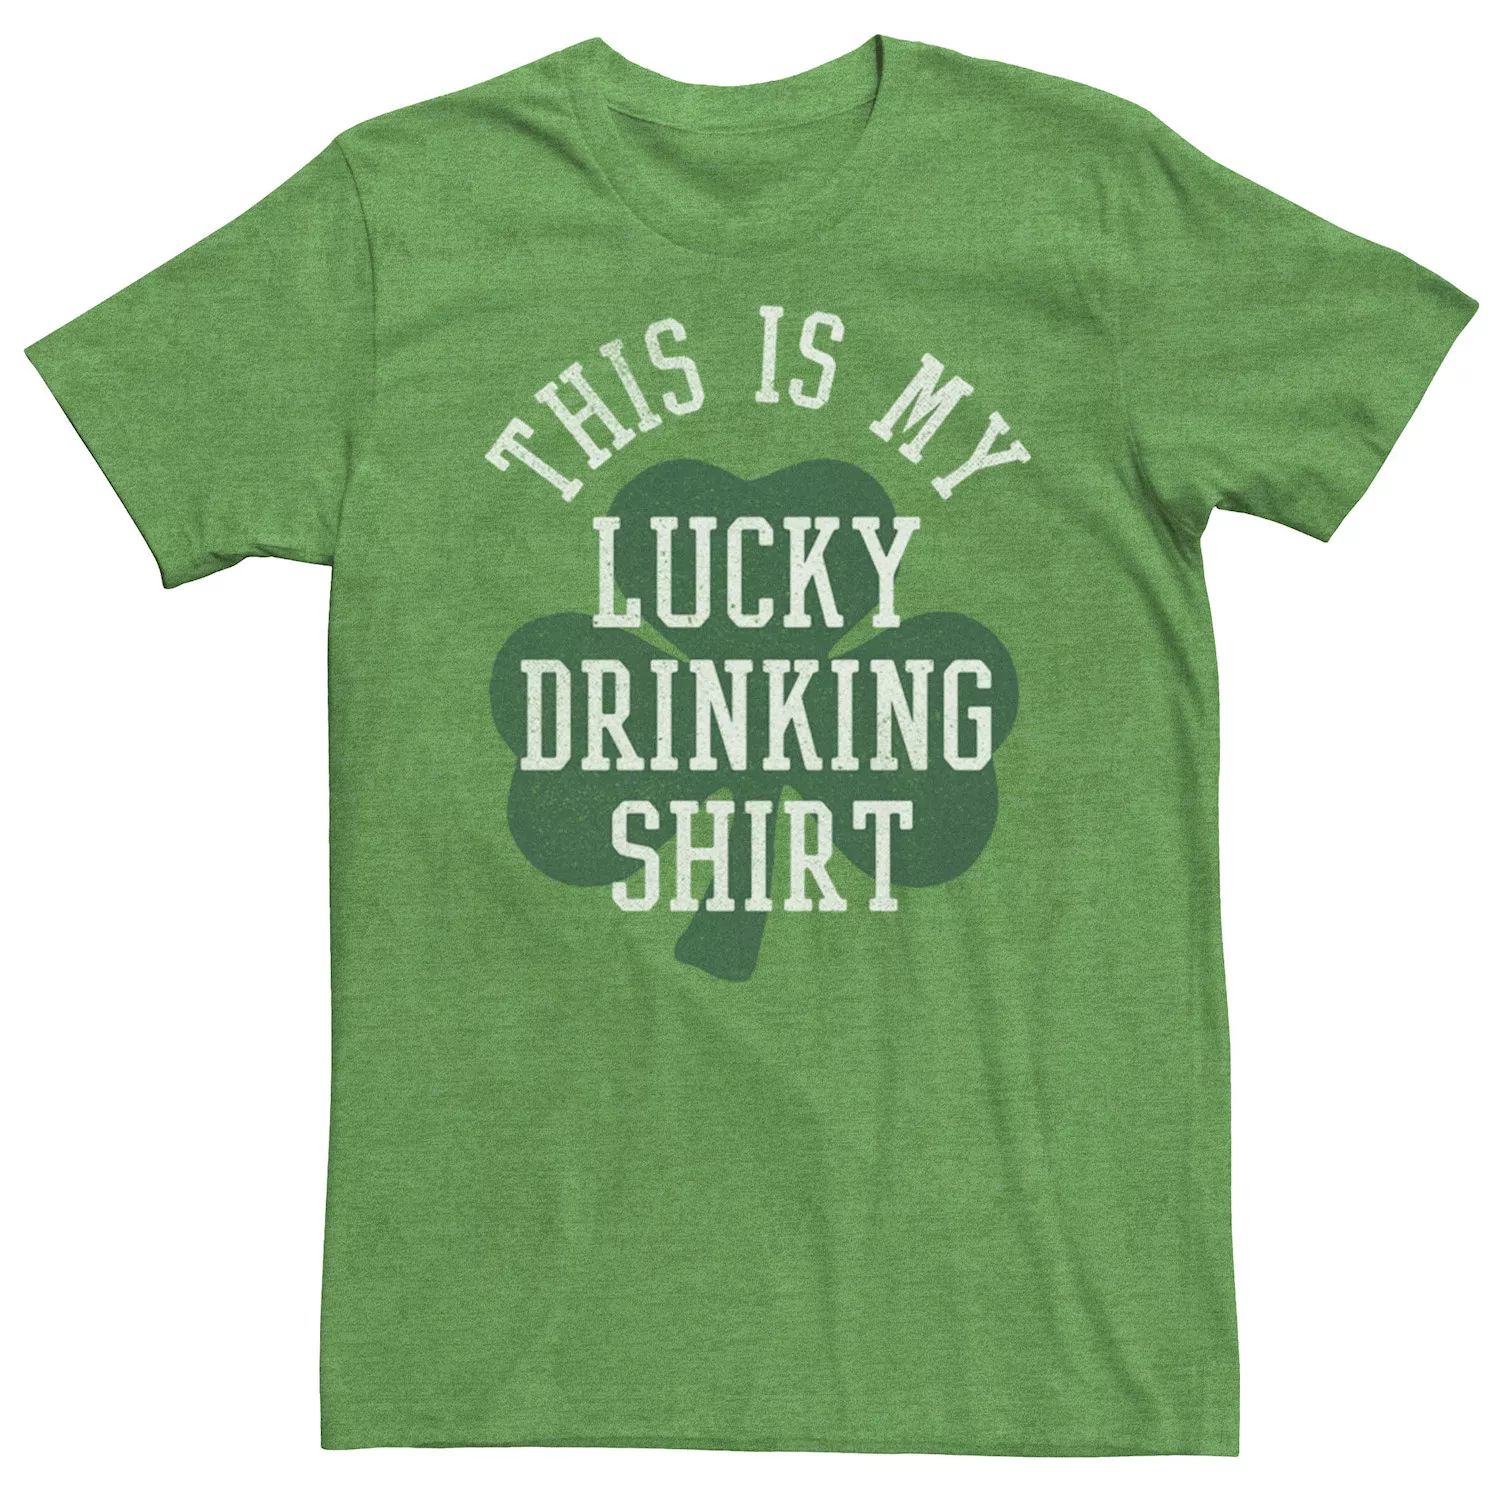 Мужская футболка Lucky Shirt ко Дню Святого Патрика Licensed Character мужская футболка с надписью hulk lucky ко дню святого патрика marvel